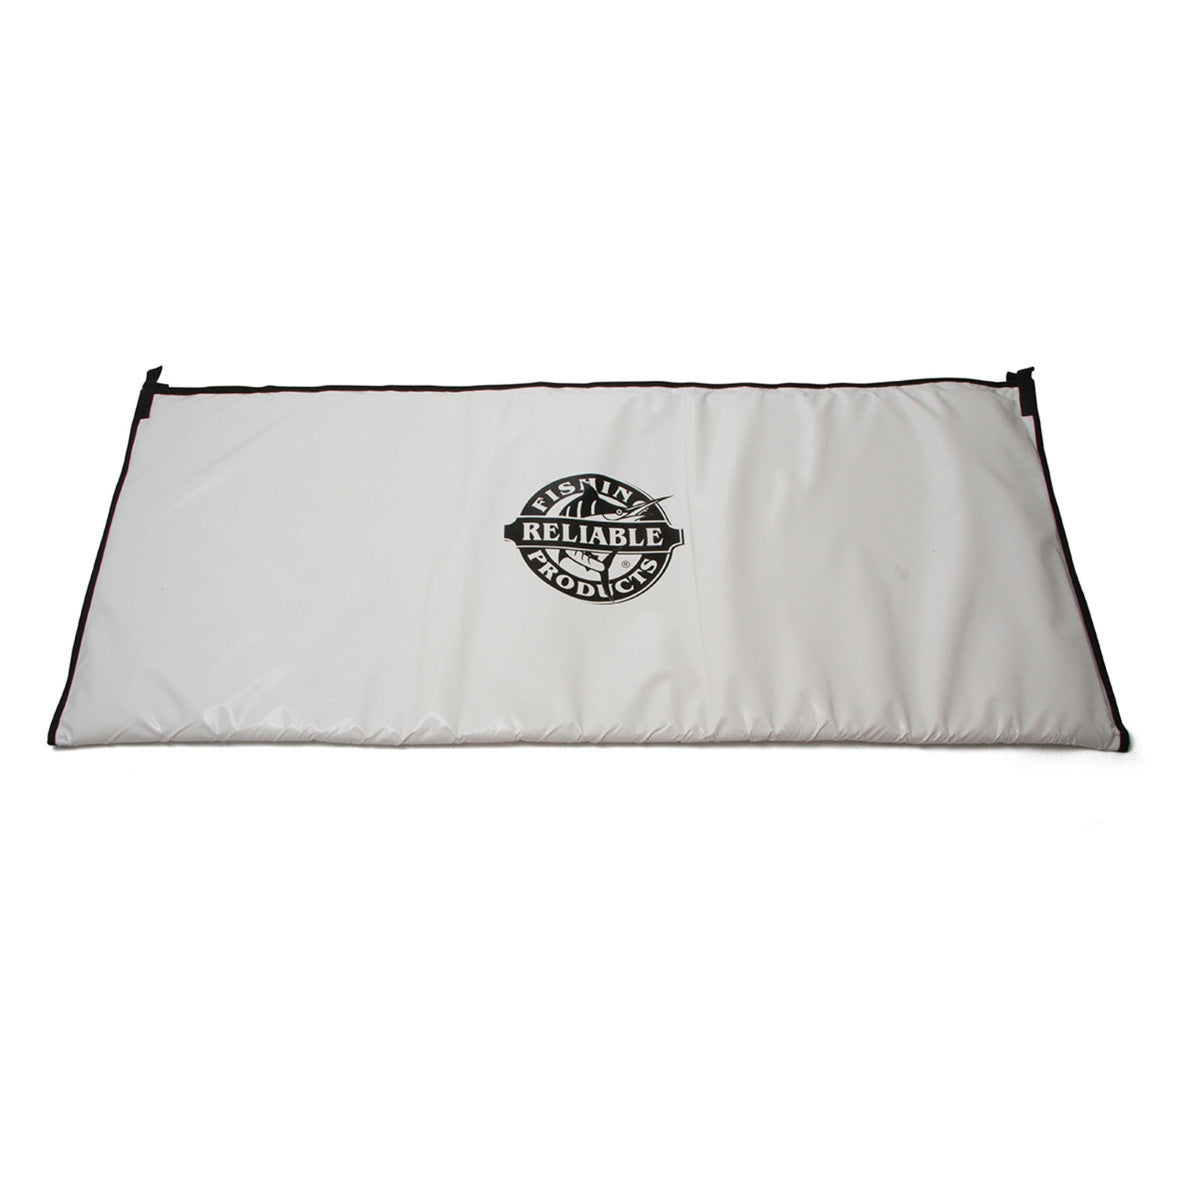 Tournament Billfish Blanket, Insulated Cooler, 50 X 105